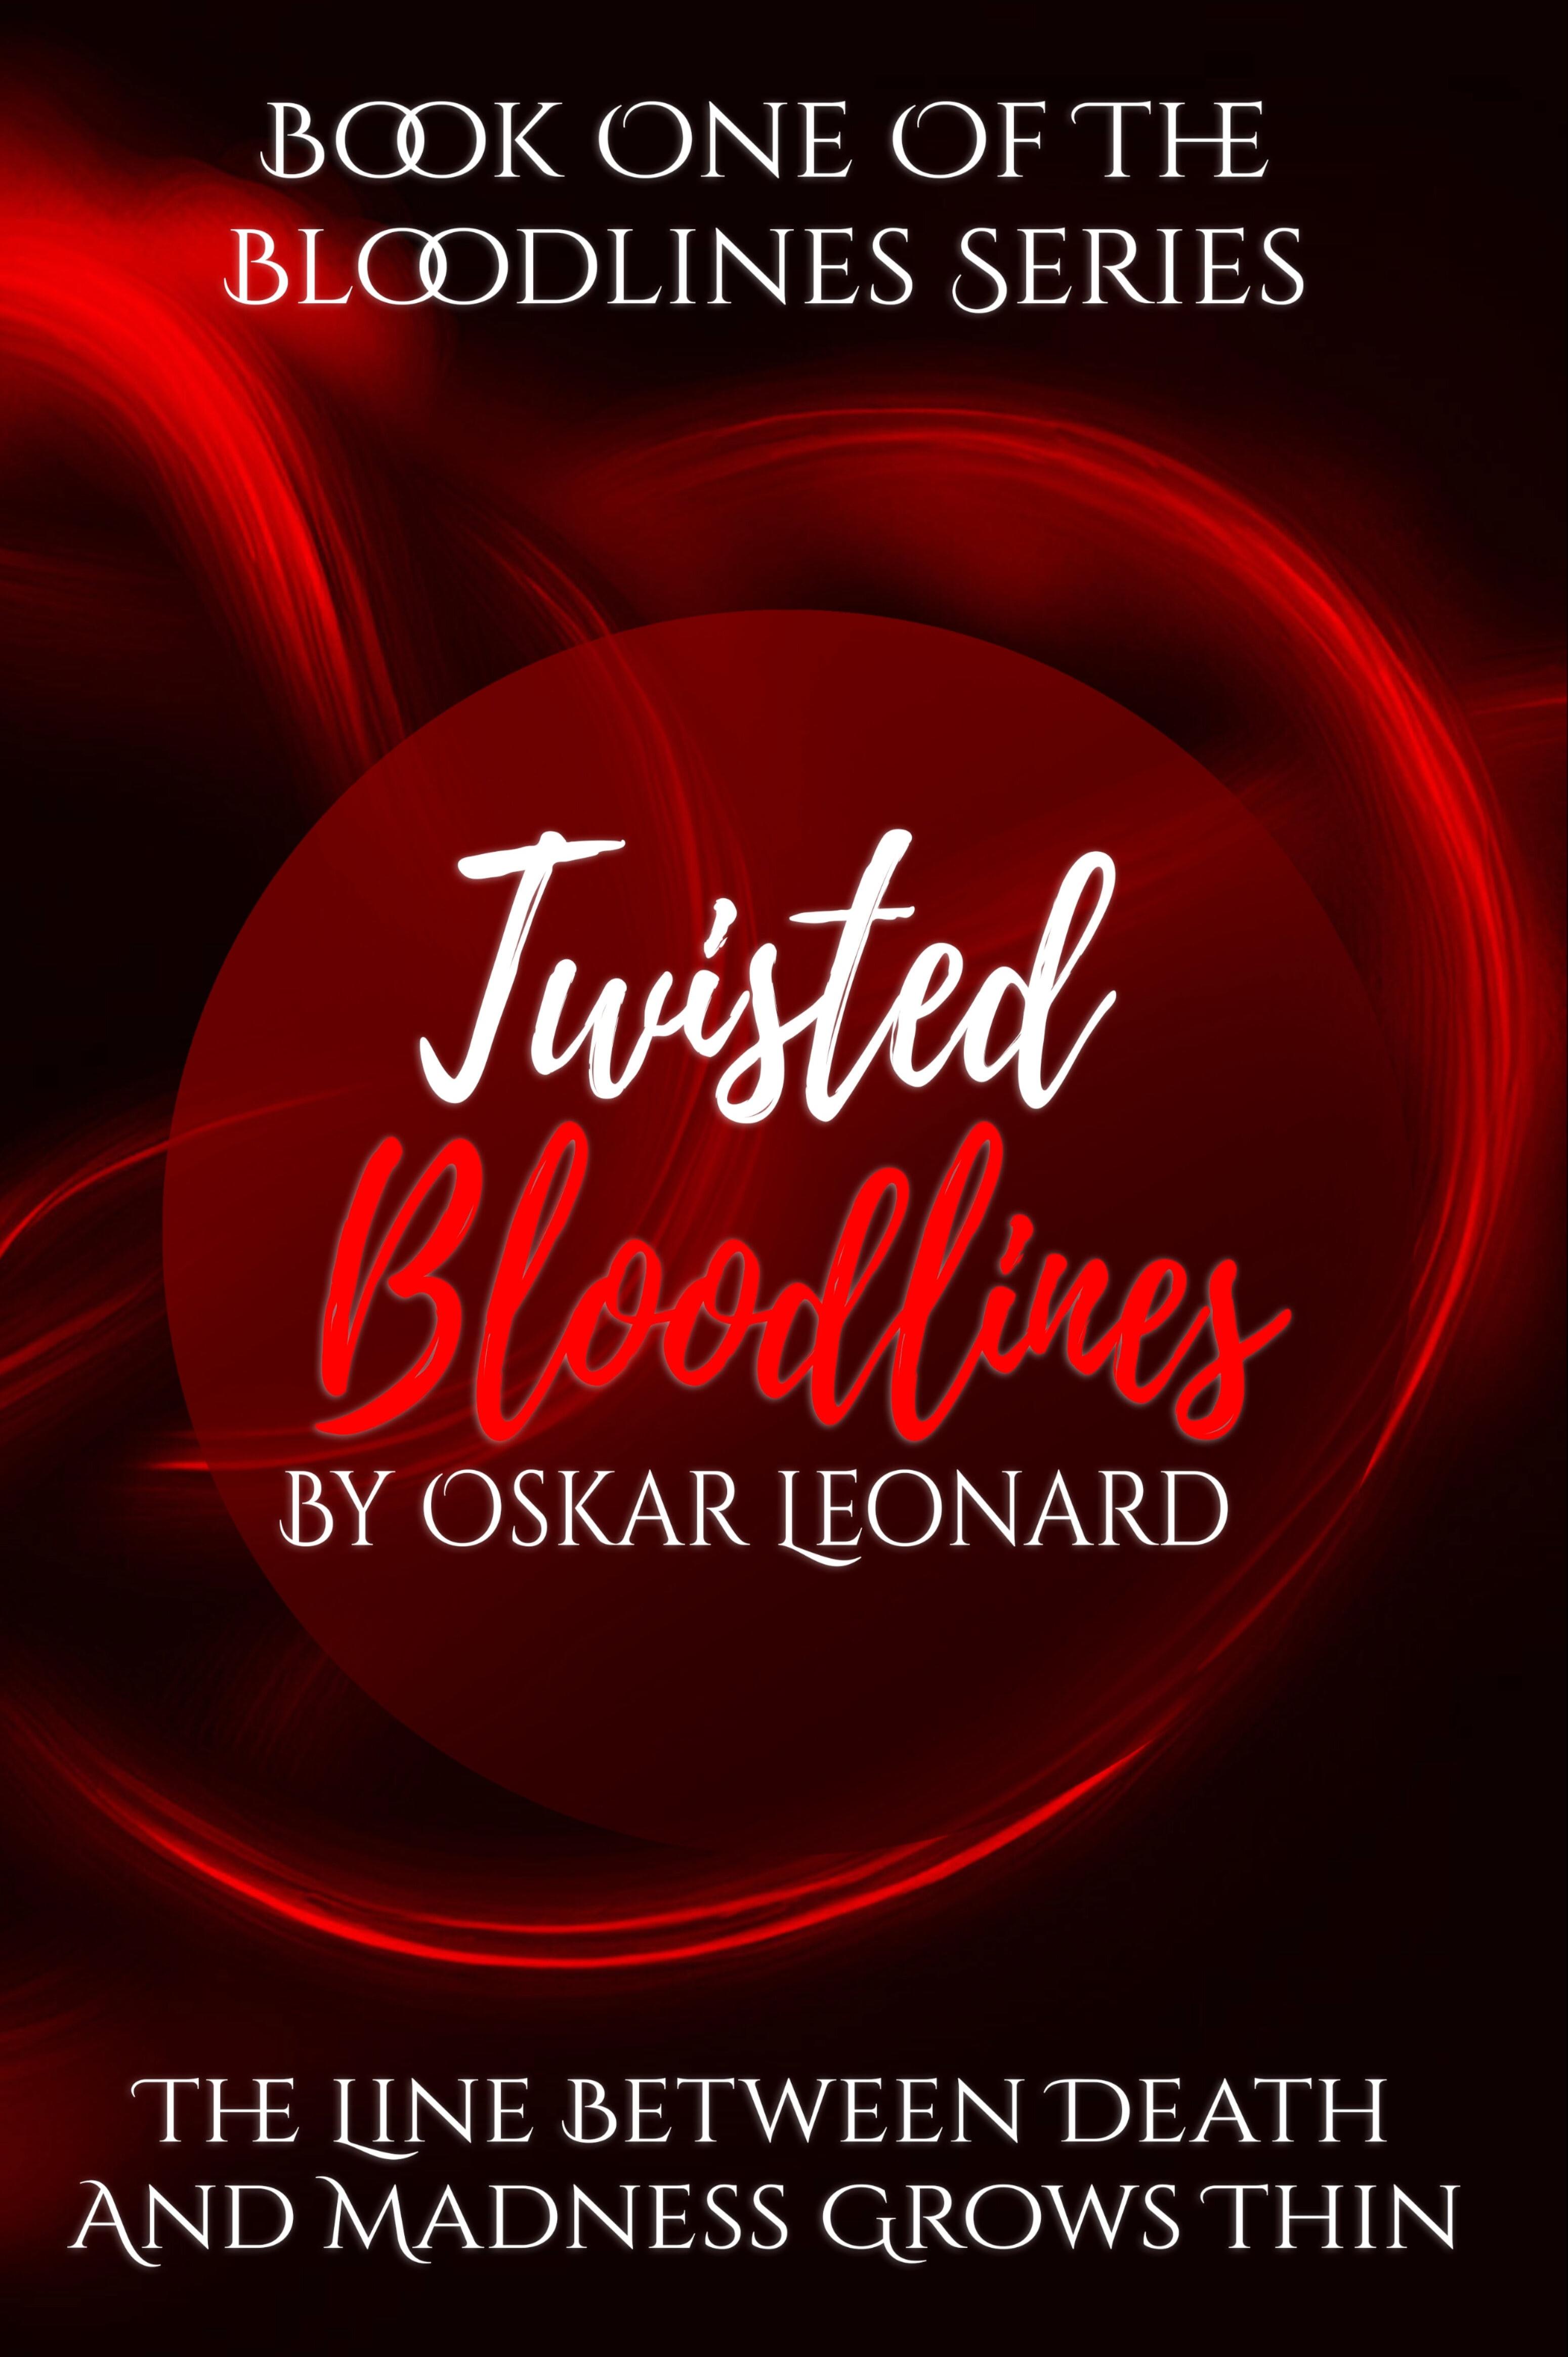 Book cover of Twisted Bloodlines by Oskar Leonard